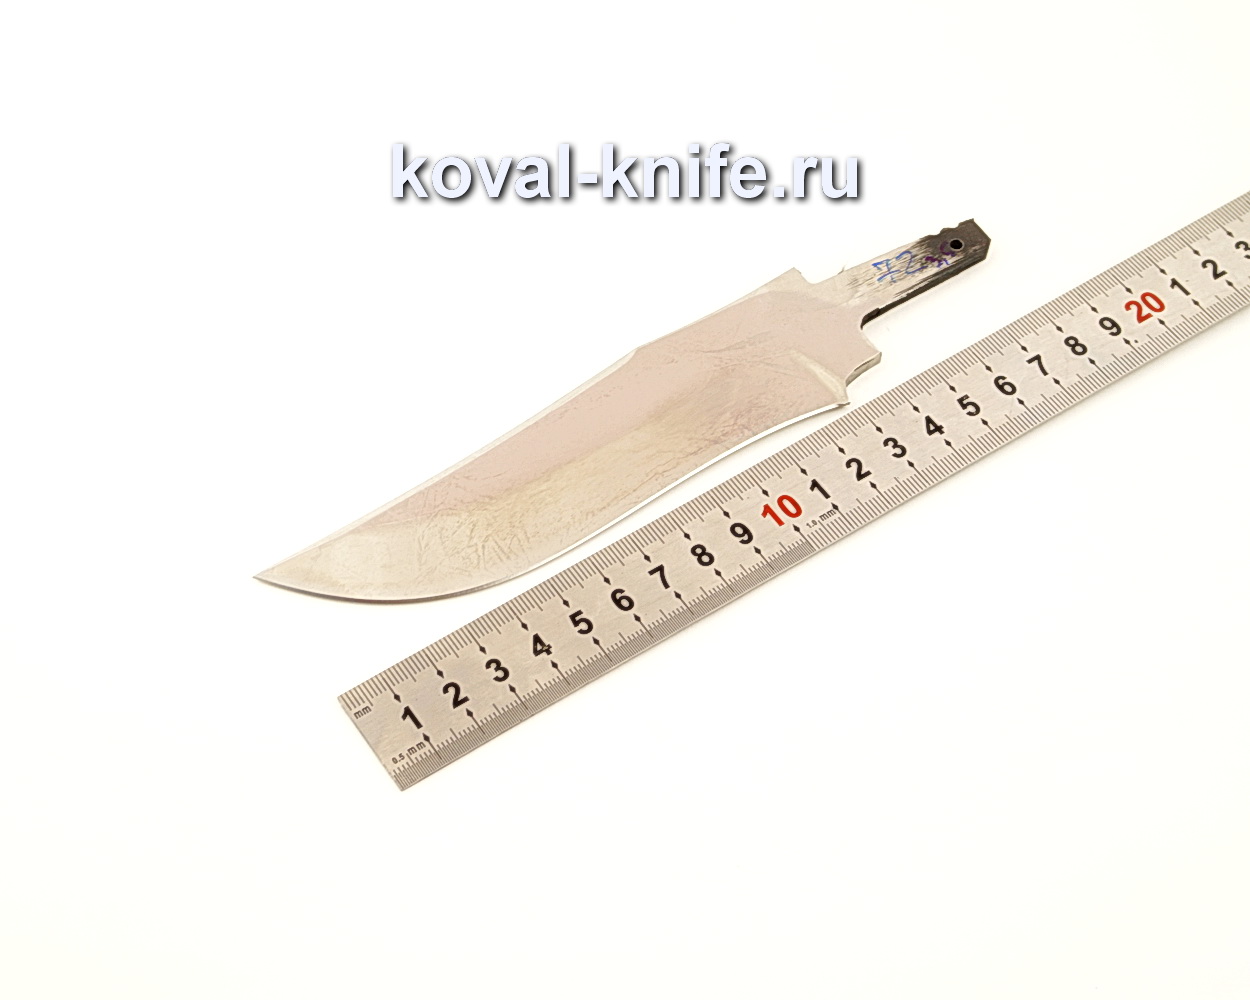 Клинок для ножа из кованой 95Х18 N72